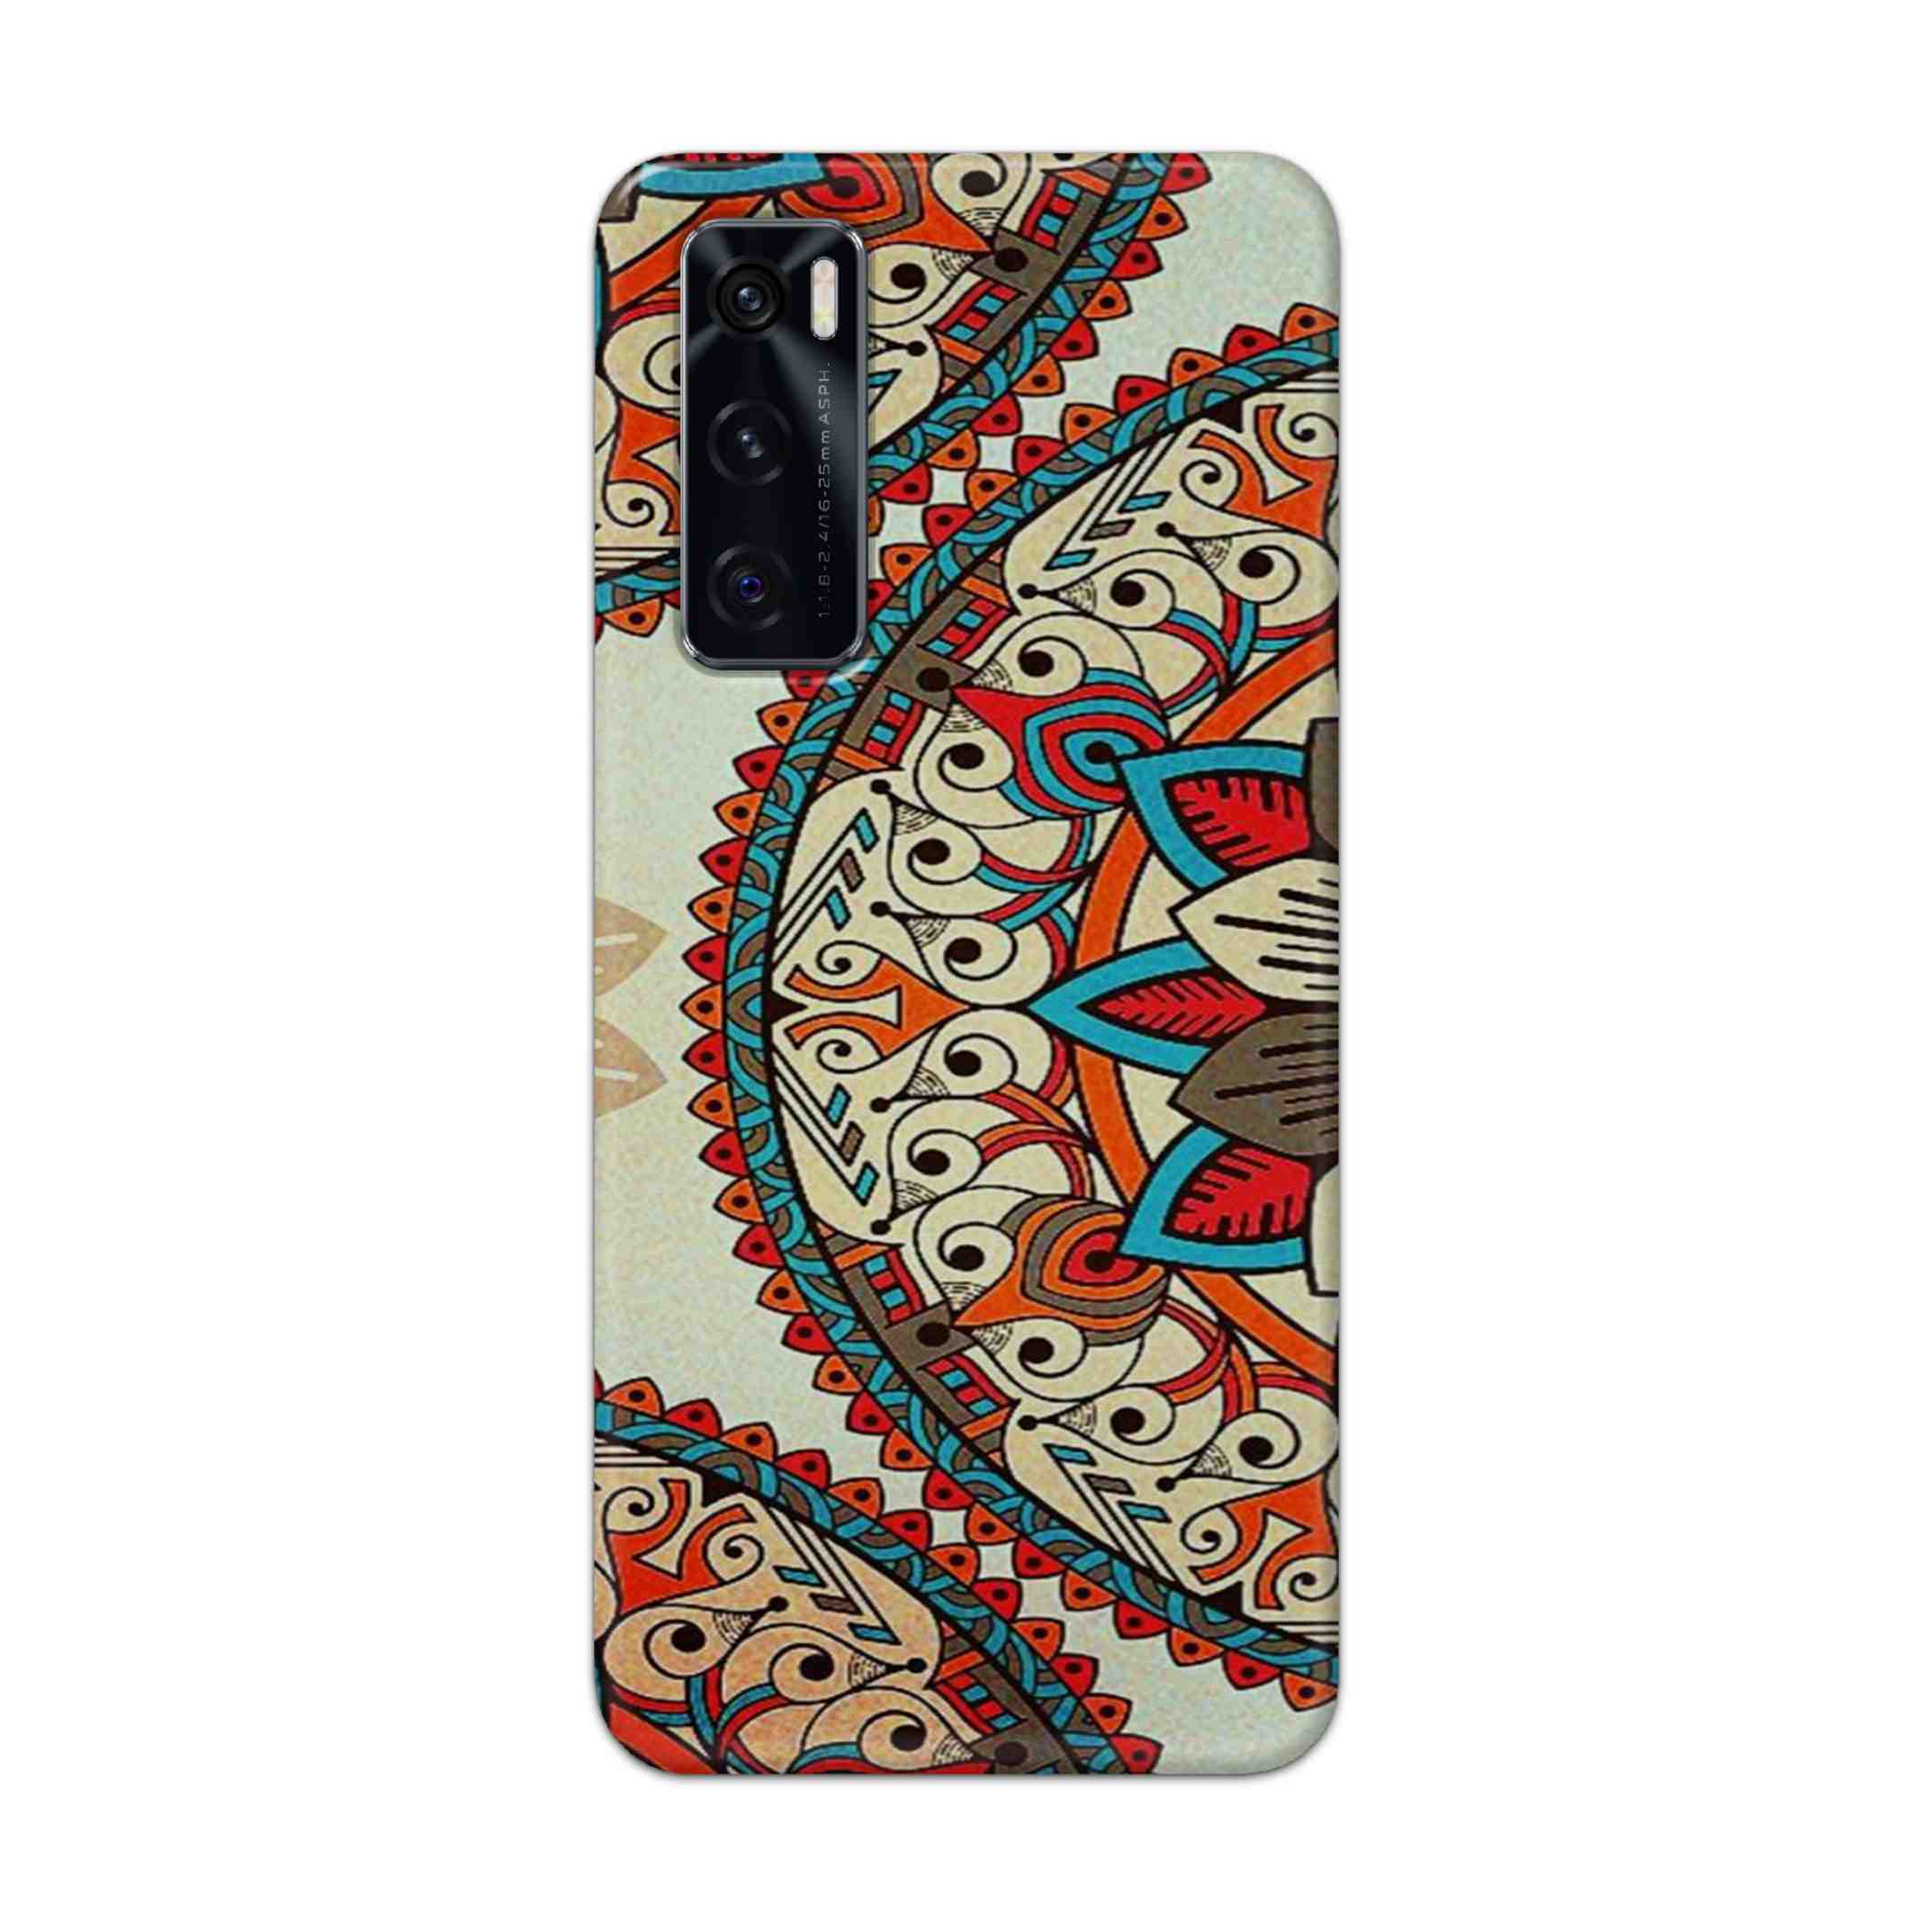 Buy Aztec Mandalas Hard Back Mobile Phone Case Cover For Vivo V20 SE Online